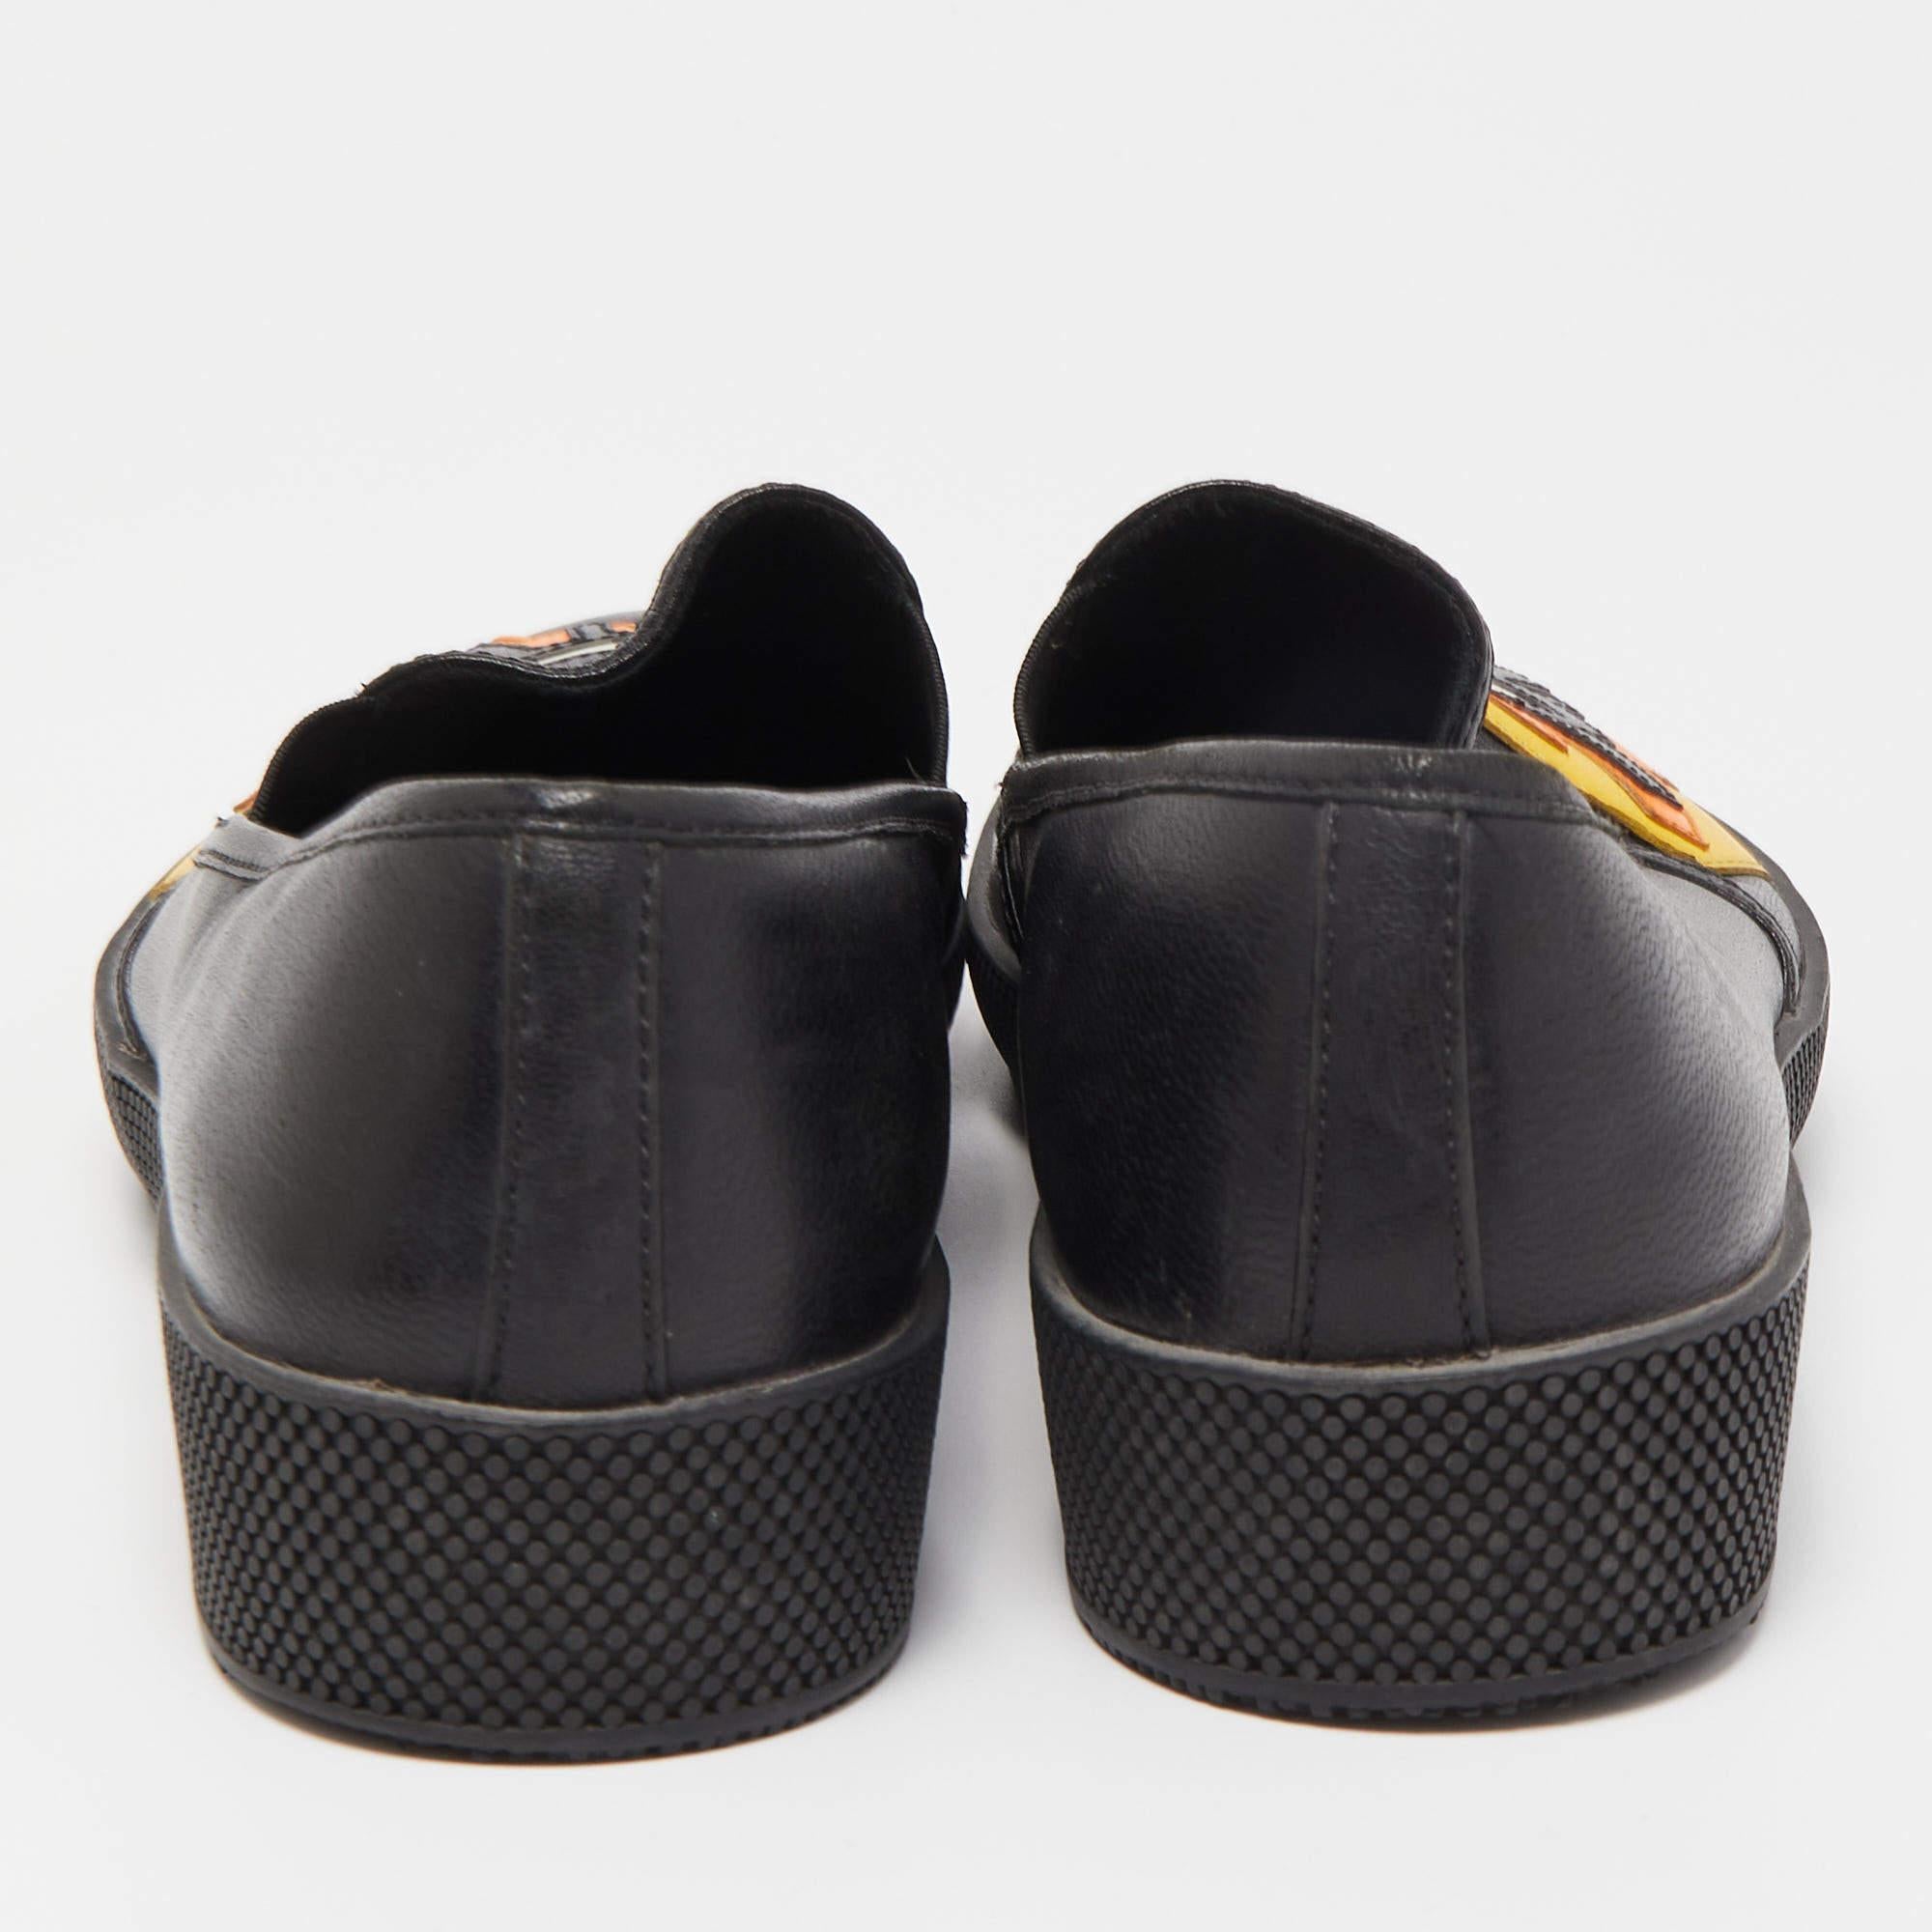 Prada Black Leather Smoking Slippers Size 37.5 3